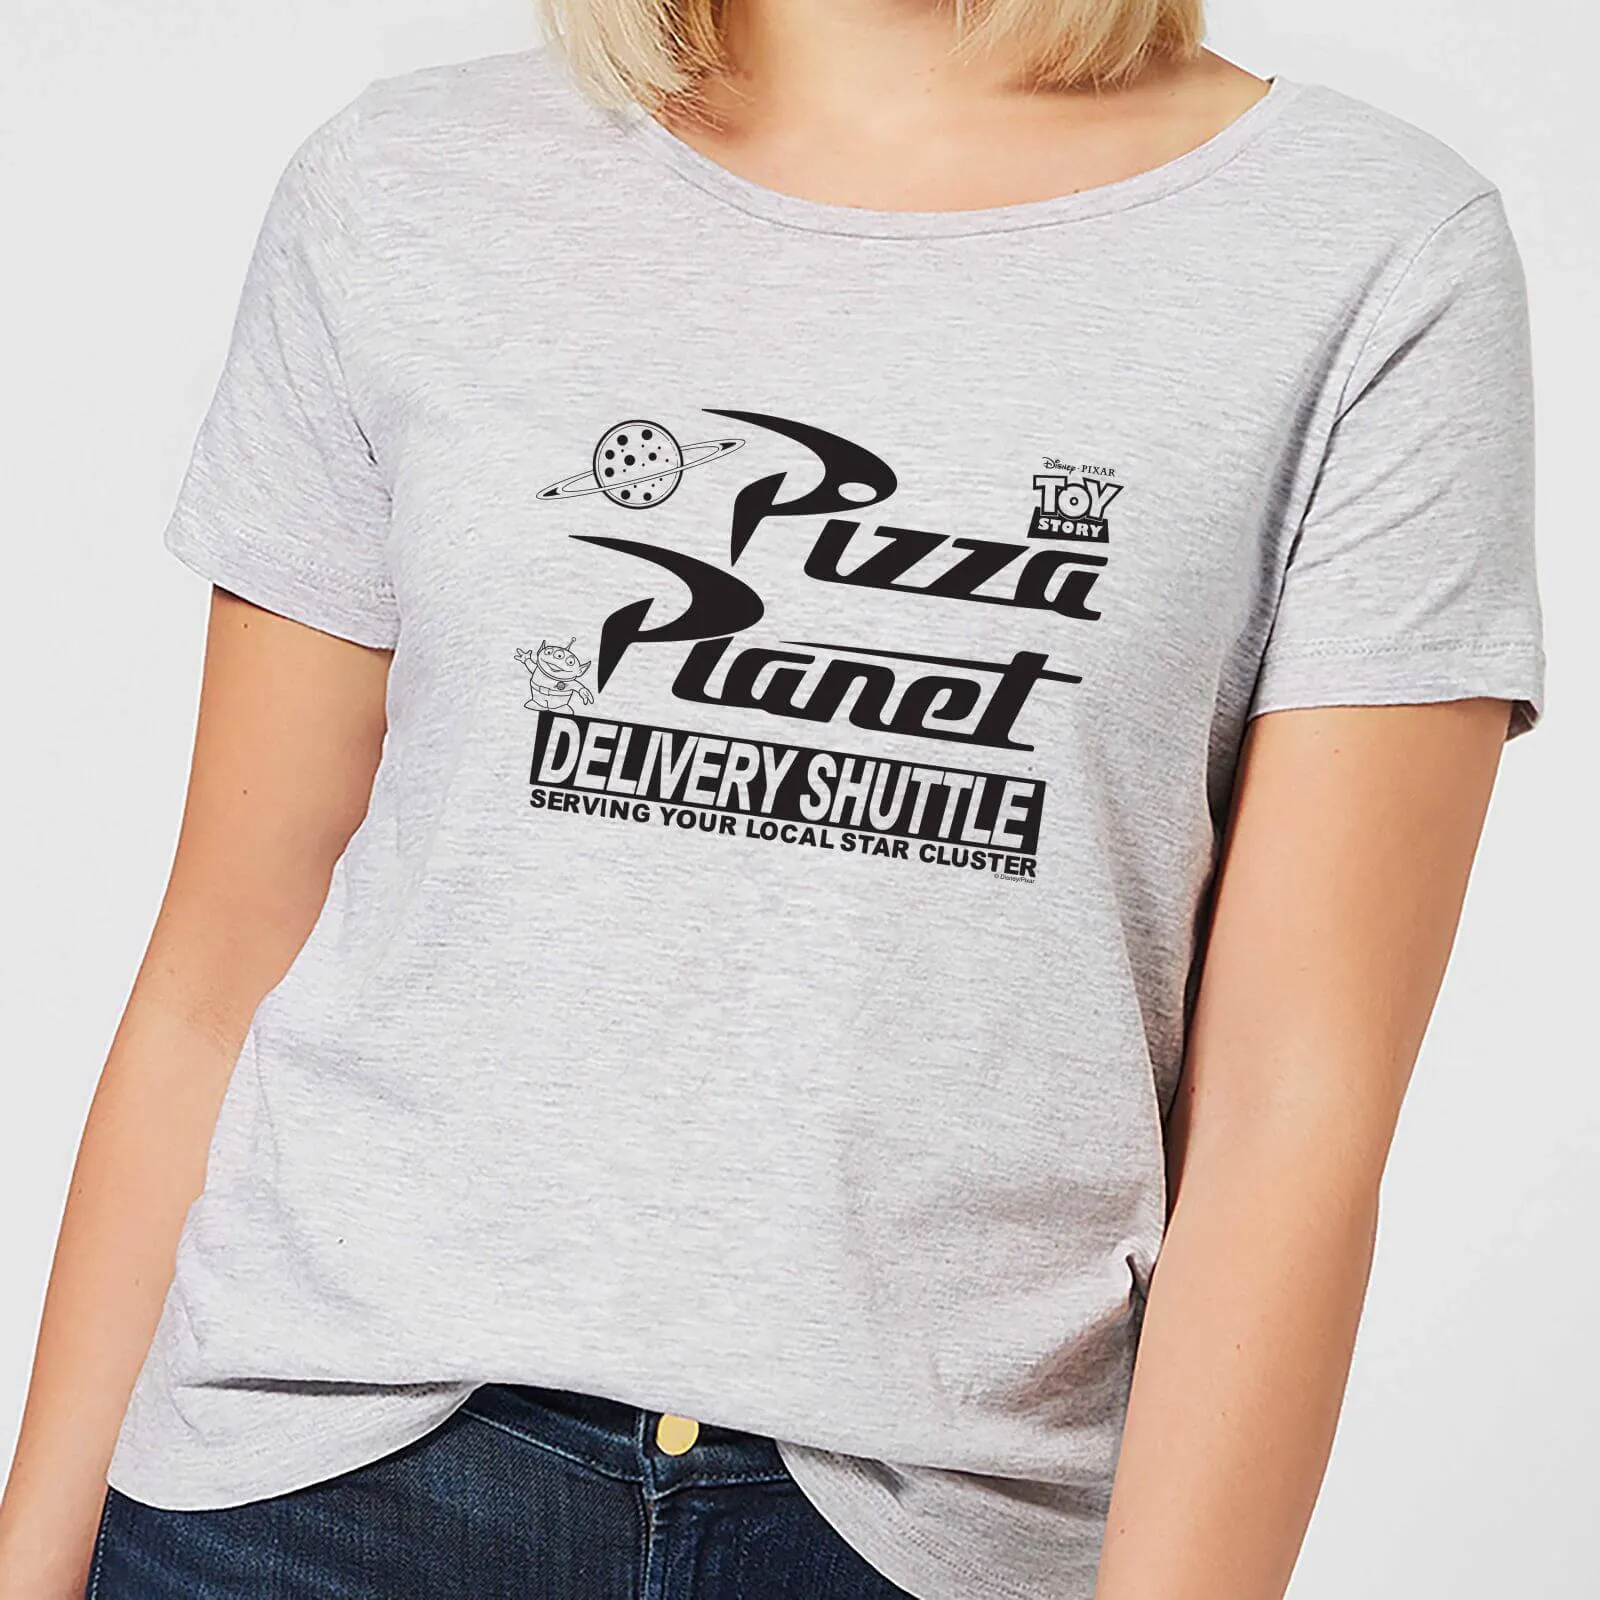 Toy Story Pizza Planet Logo Women's T-Shirt - Grey - XL